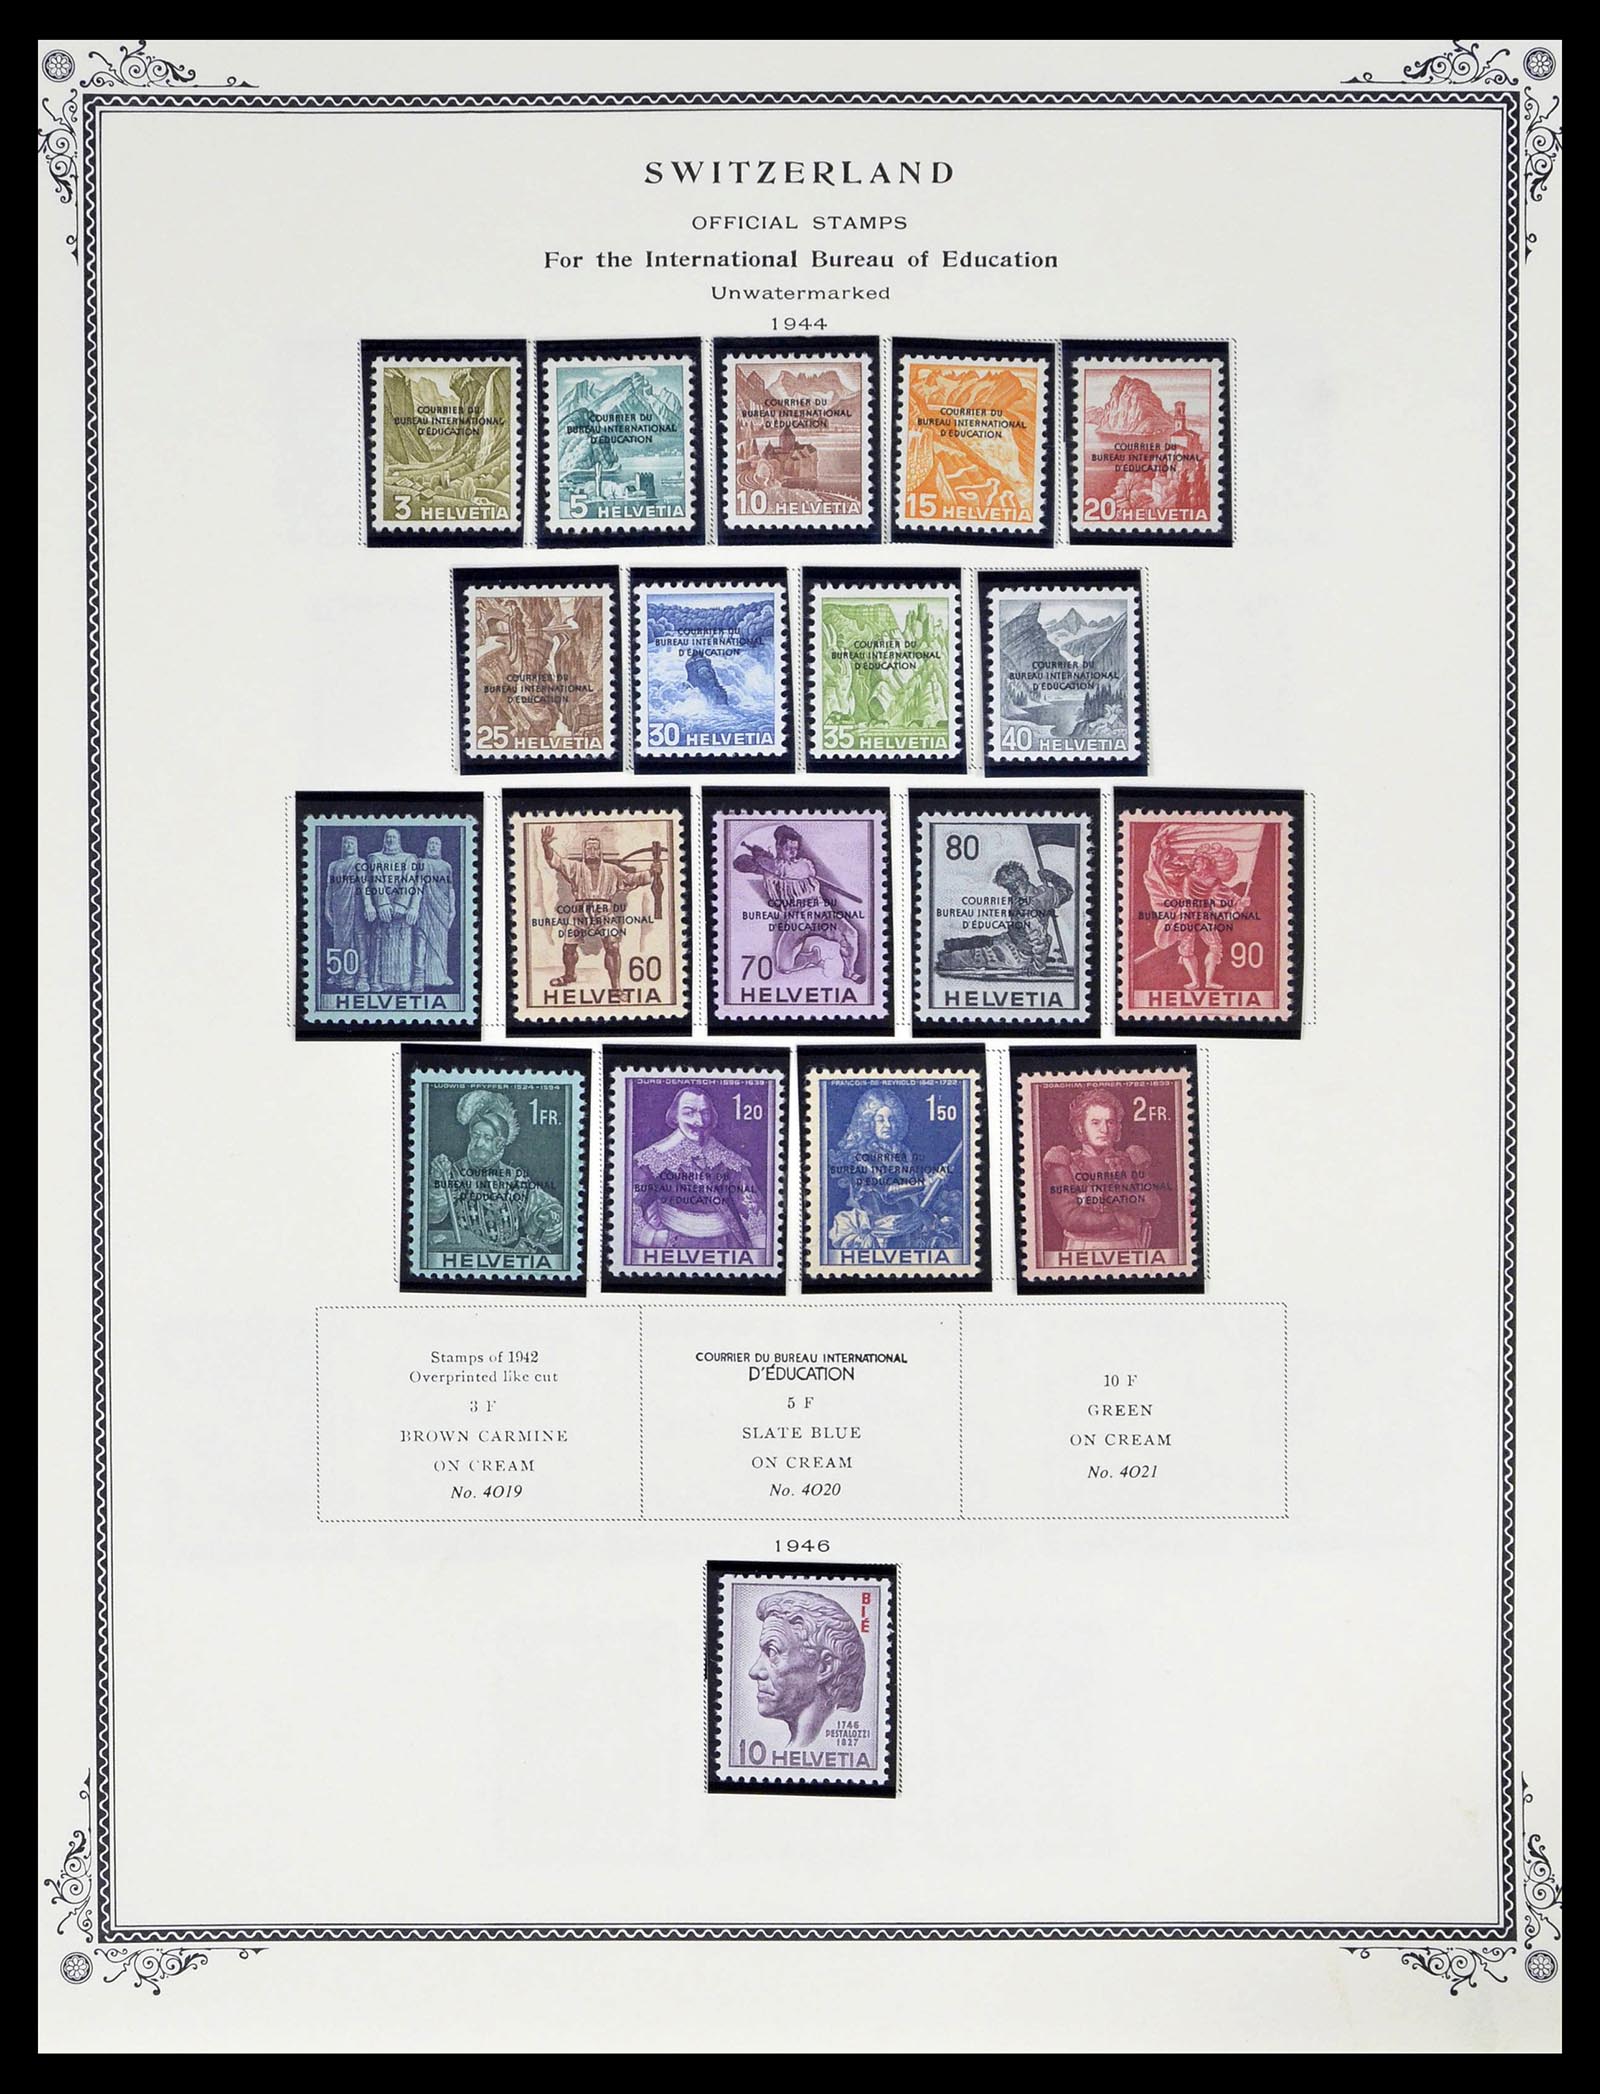 39178 0250 - Stamp collection 39178 Switzerland 1850-1989.